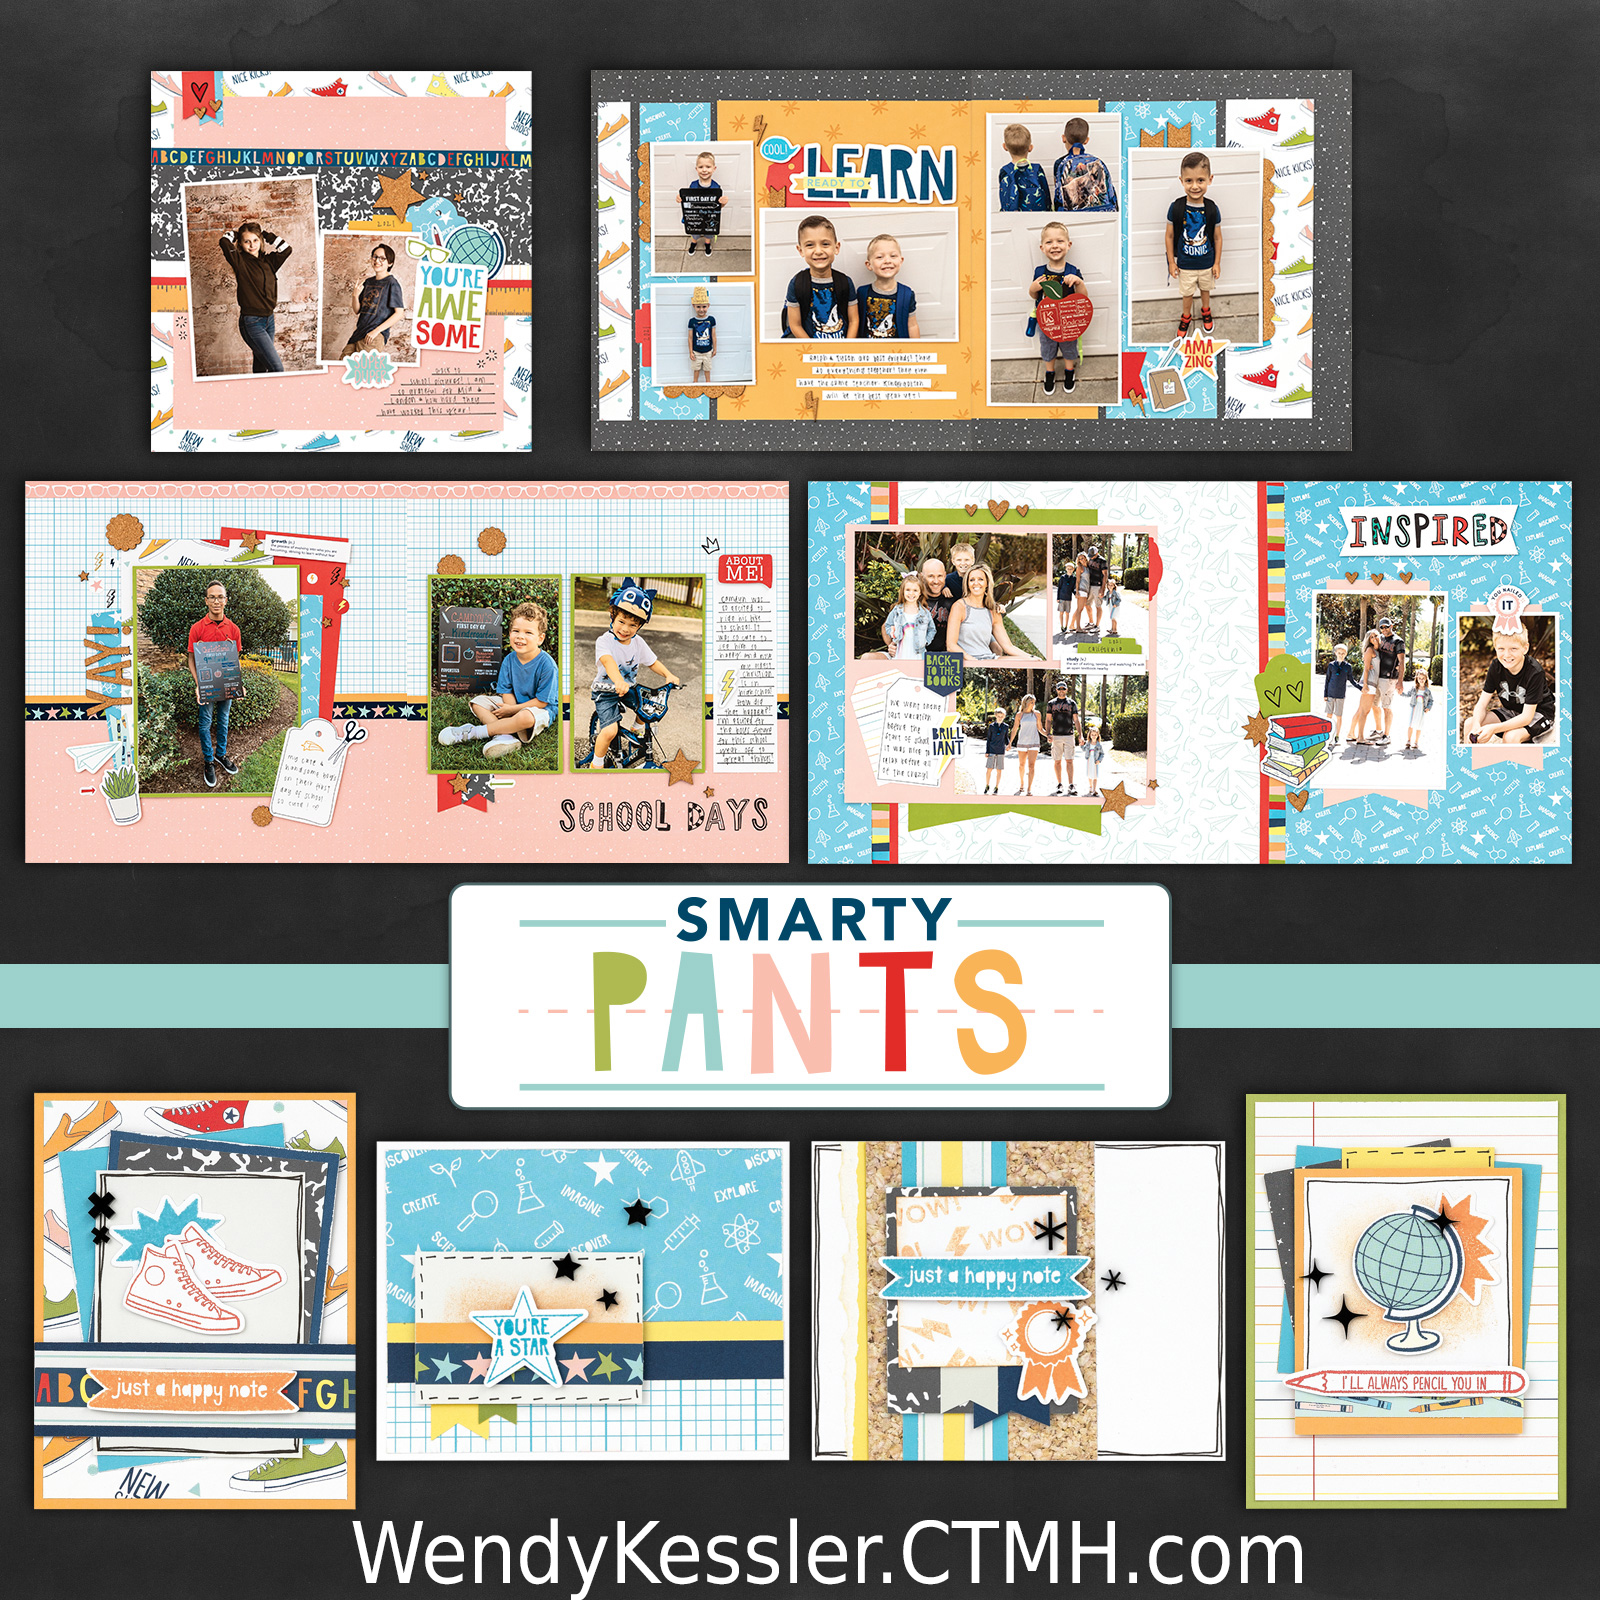 Smarty Pants workshop kits